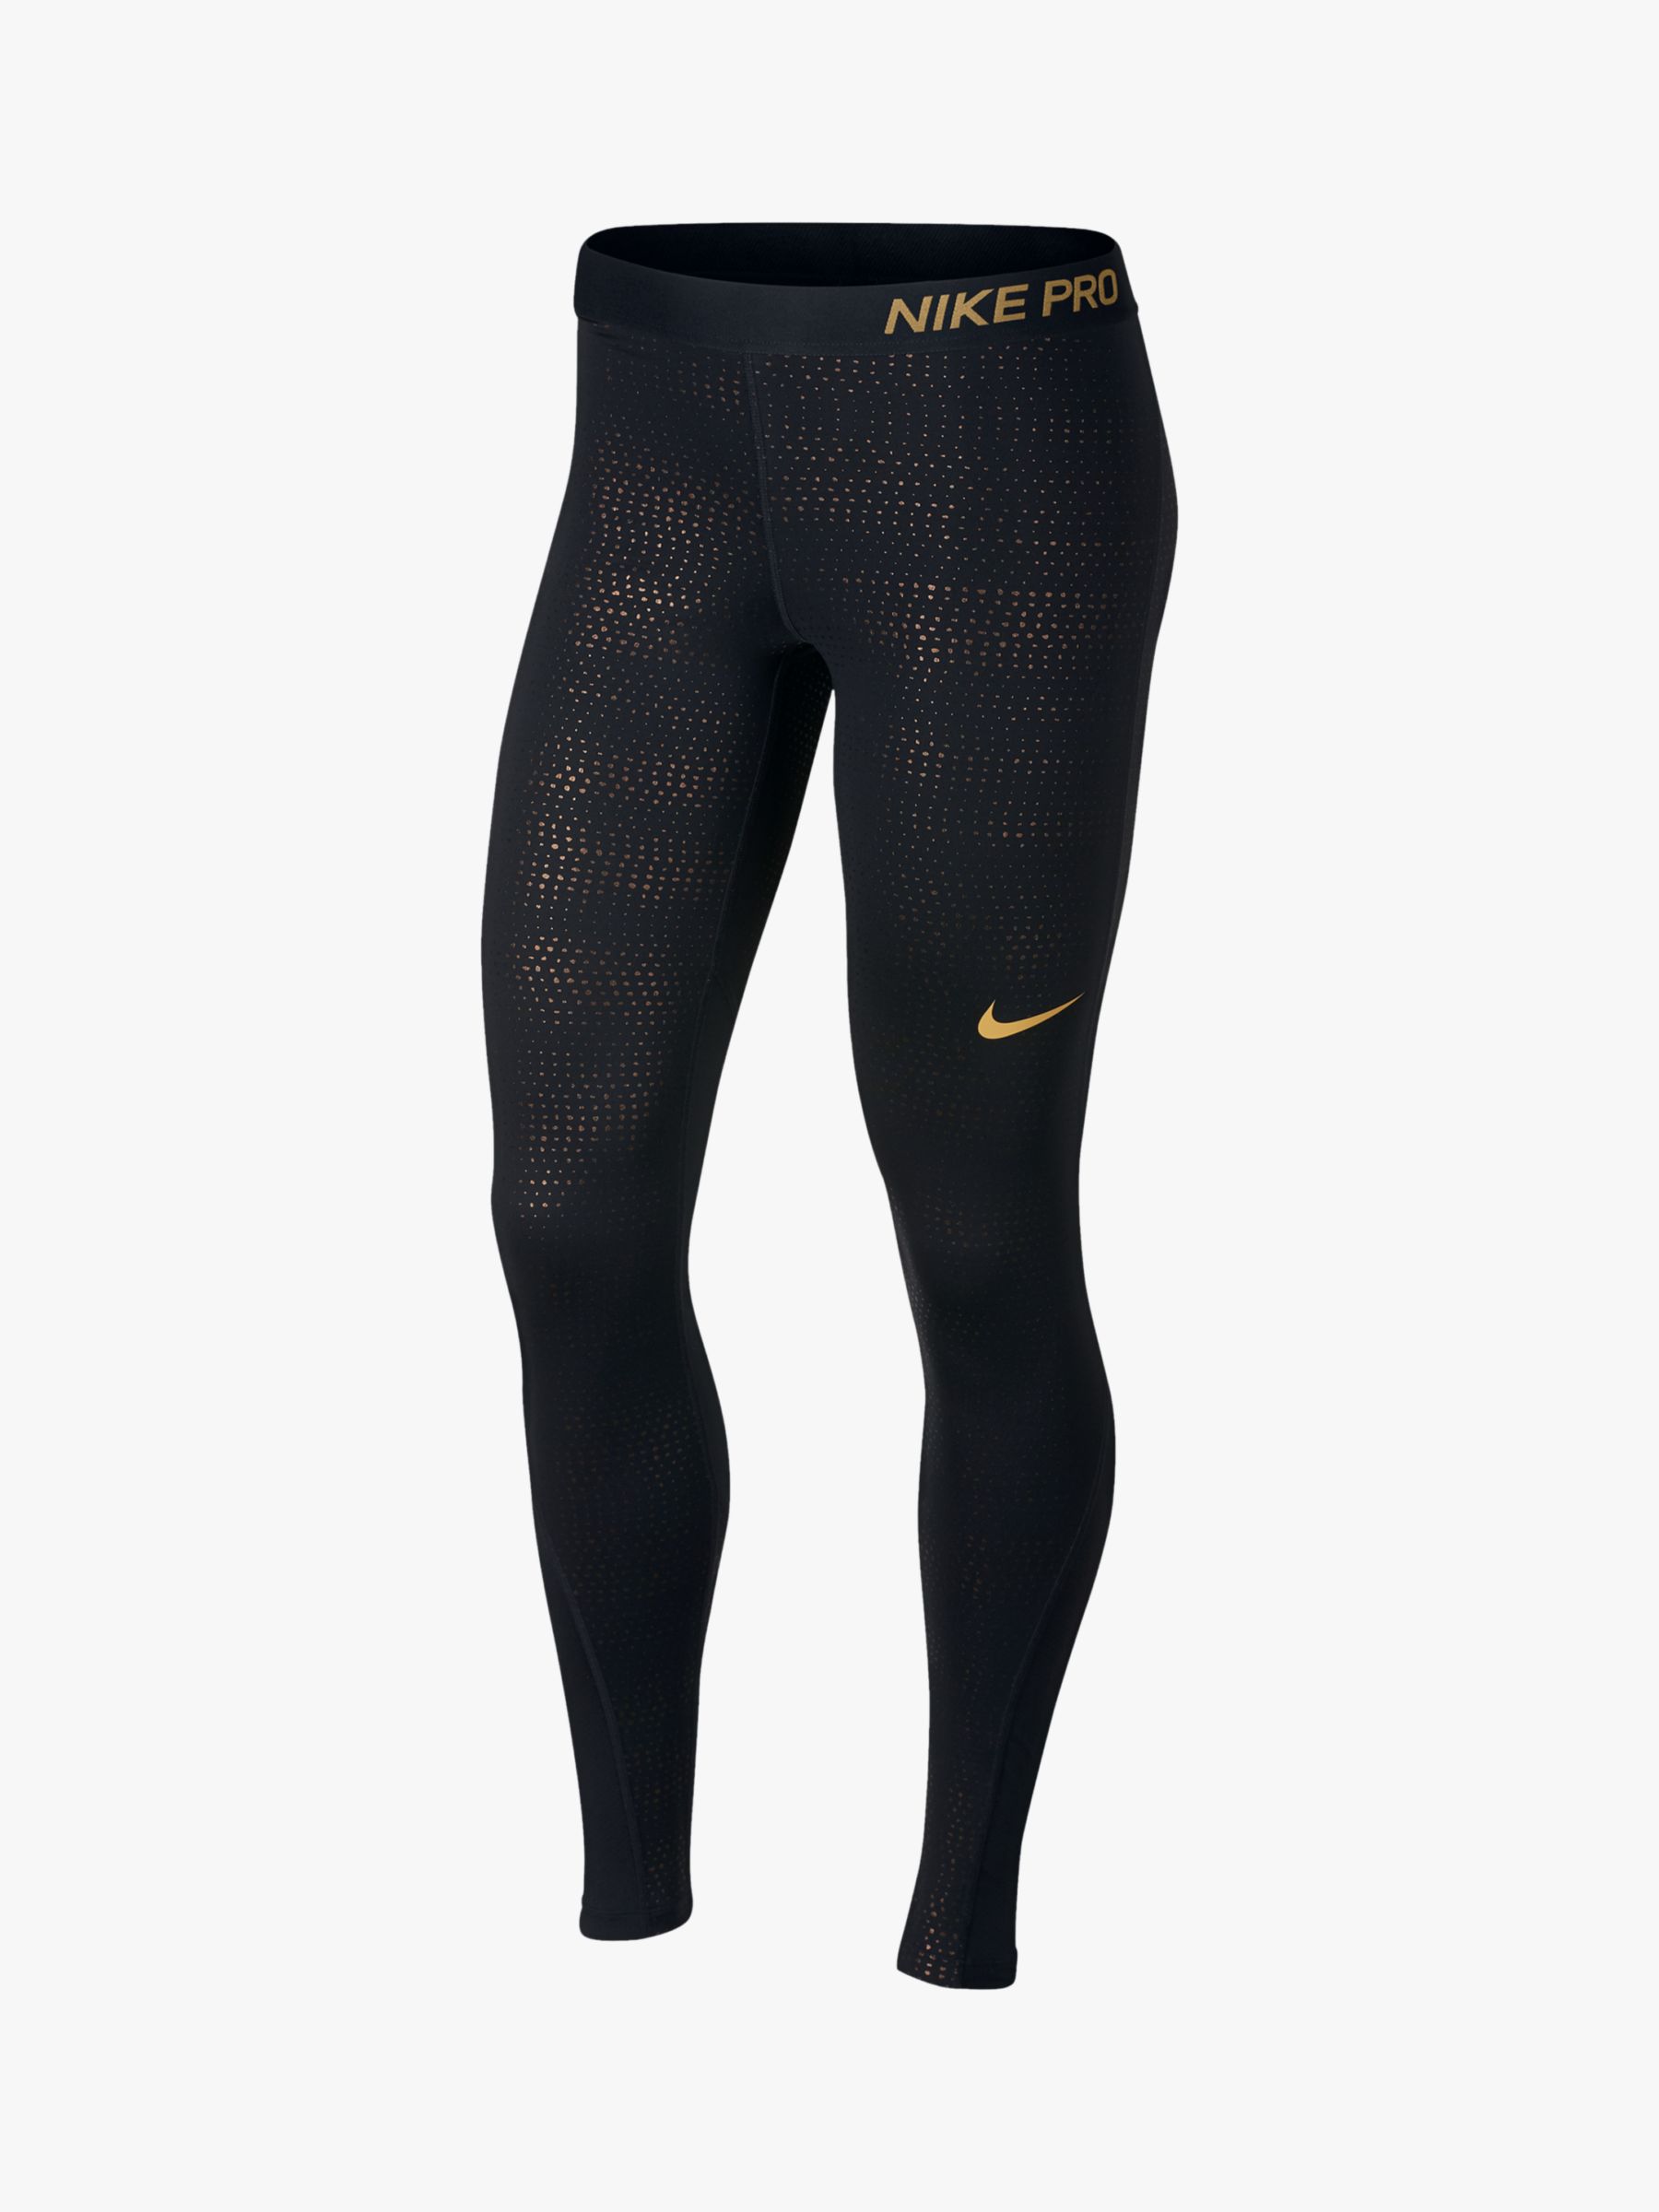 black nike leggings with gold logo